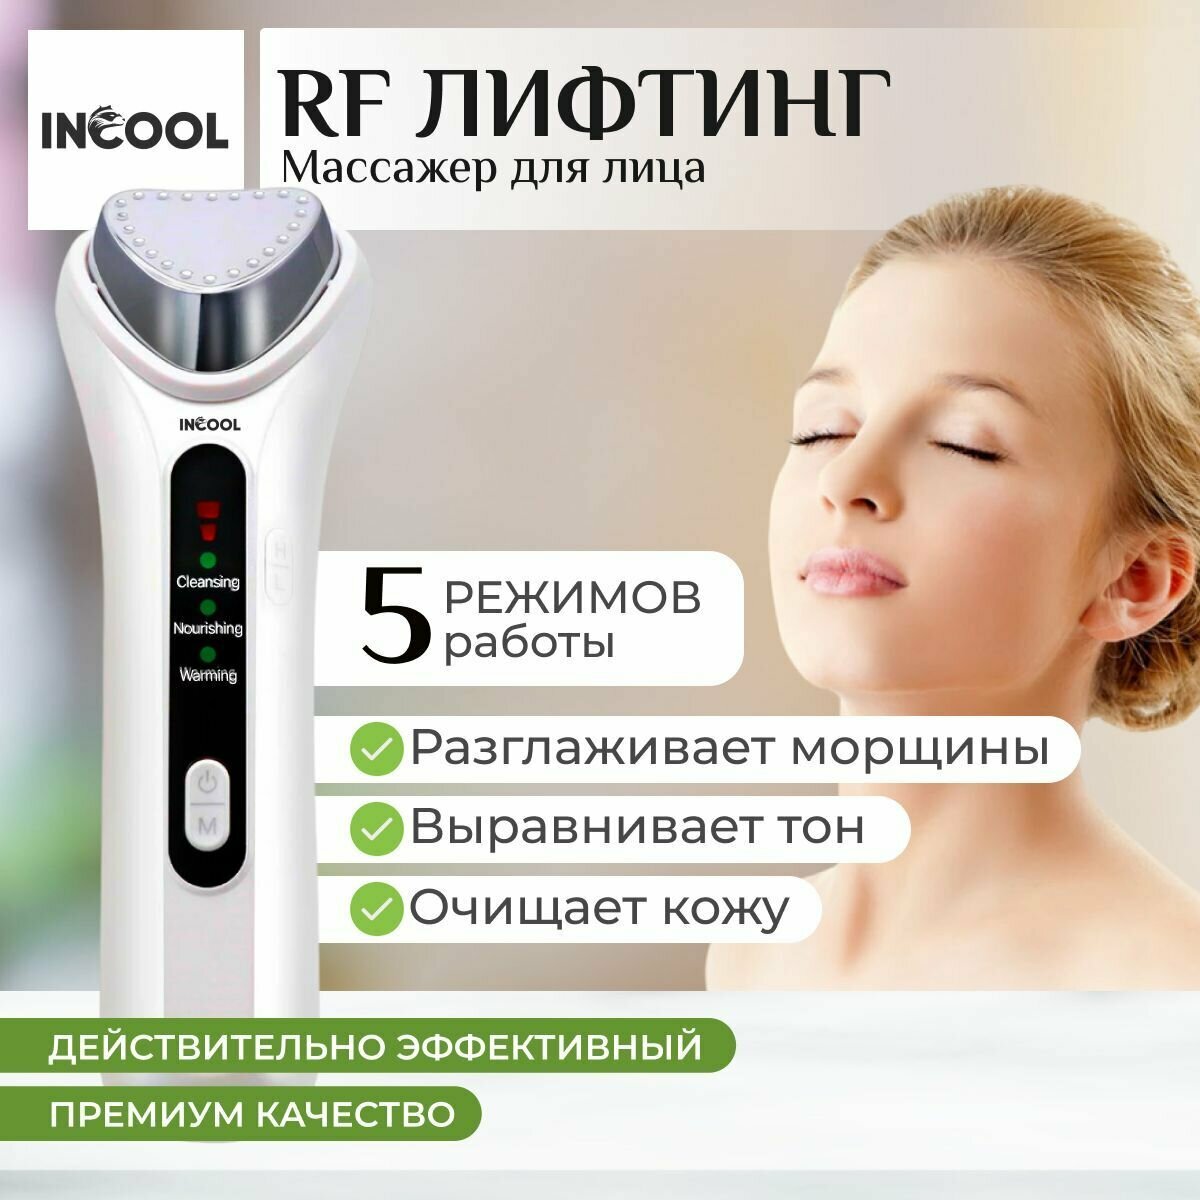 RF лифтинг косметологический аппарат для лица INCOOL мезотерапия и микротоки EMS для омоложения кожи лица